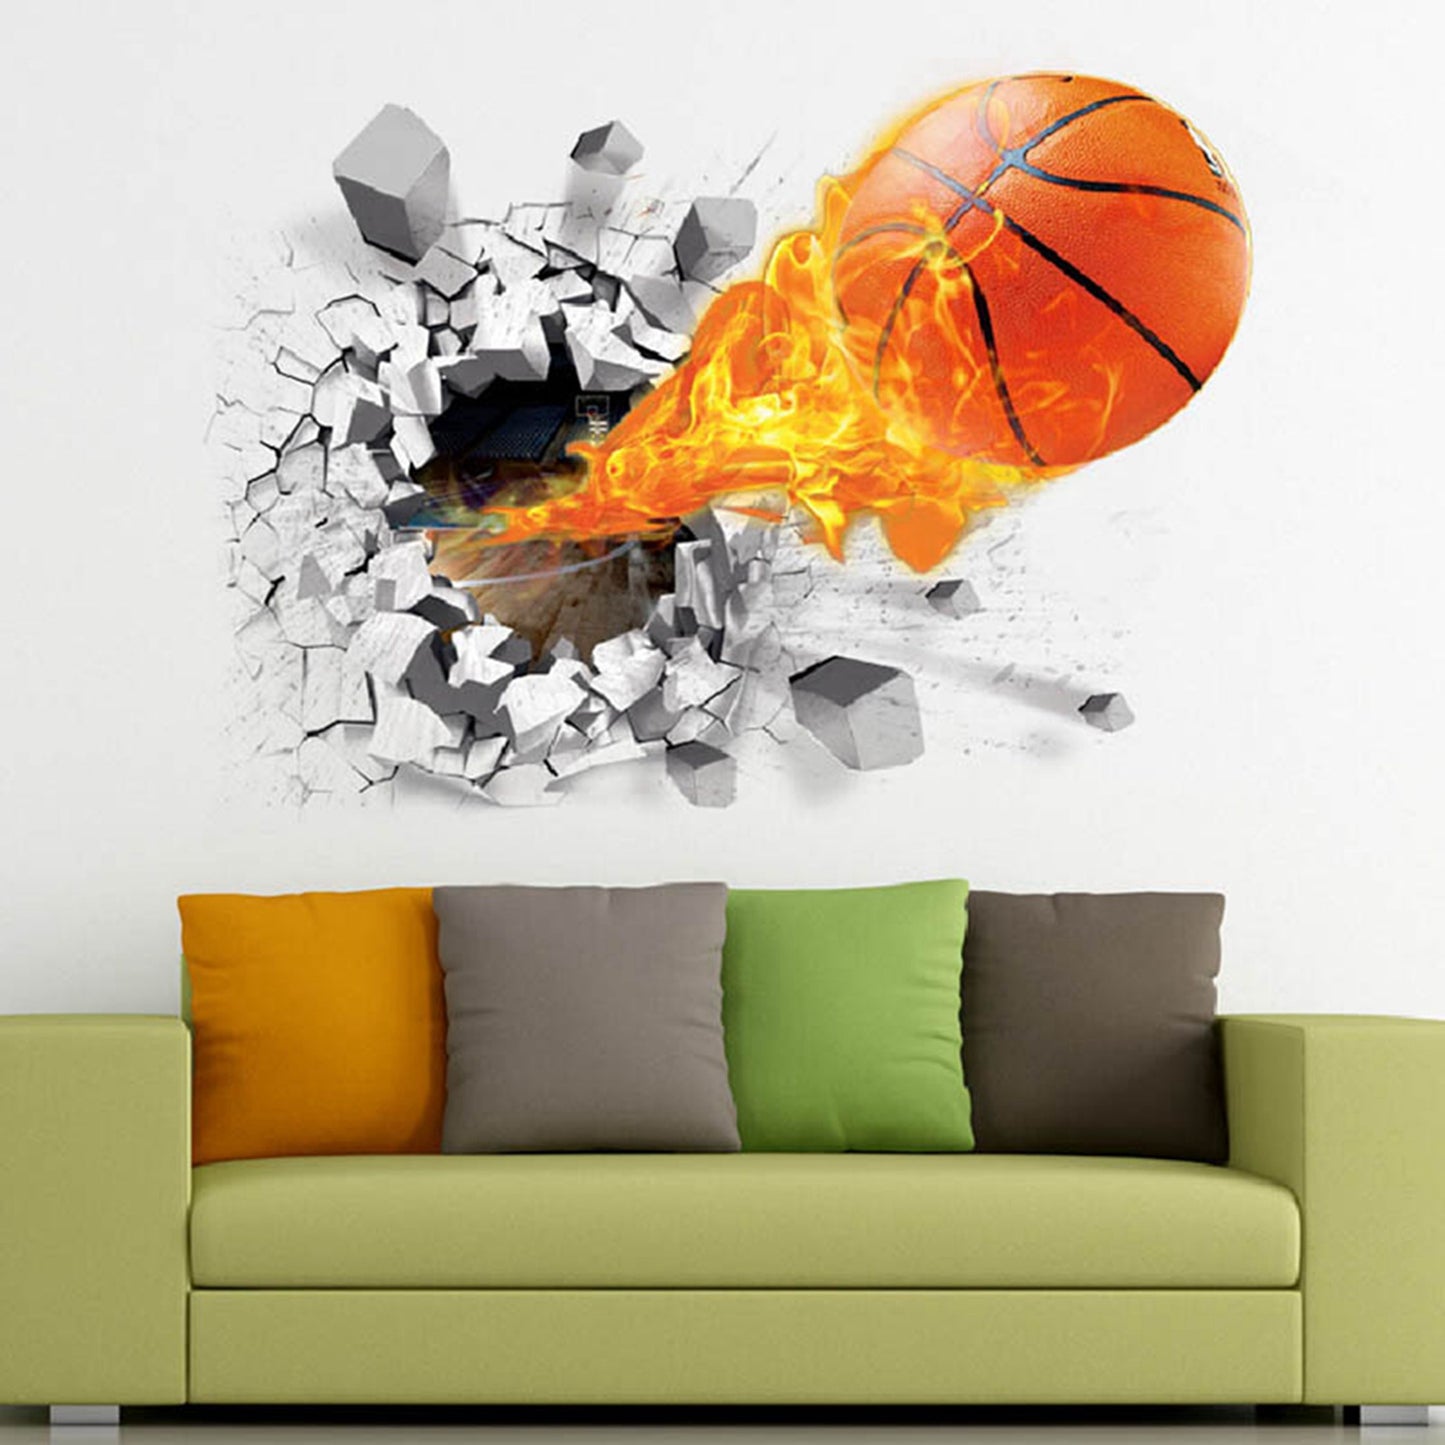 U-Shark® 3D Self-Adhesive Removable Basketball Wall Decals Stickers Basketball Wall Stickers Decals Wall Decor Wall Decor Sports Decals Wall Murals Decoration Décor Poster Nursery